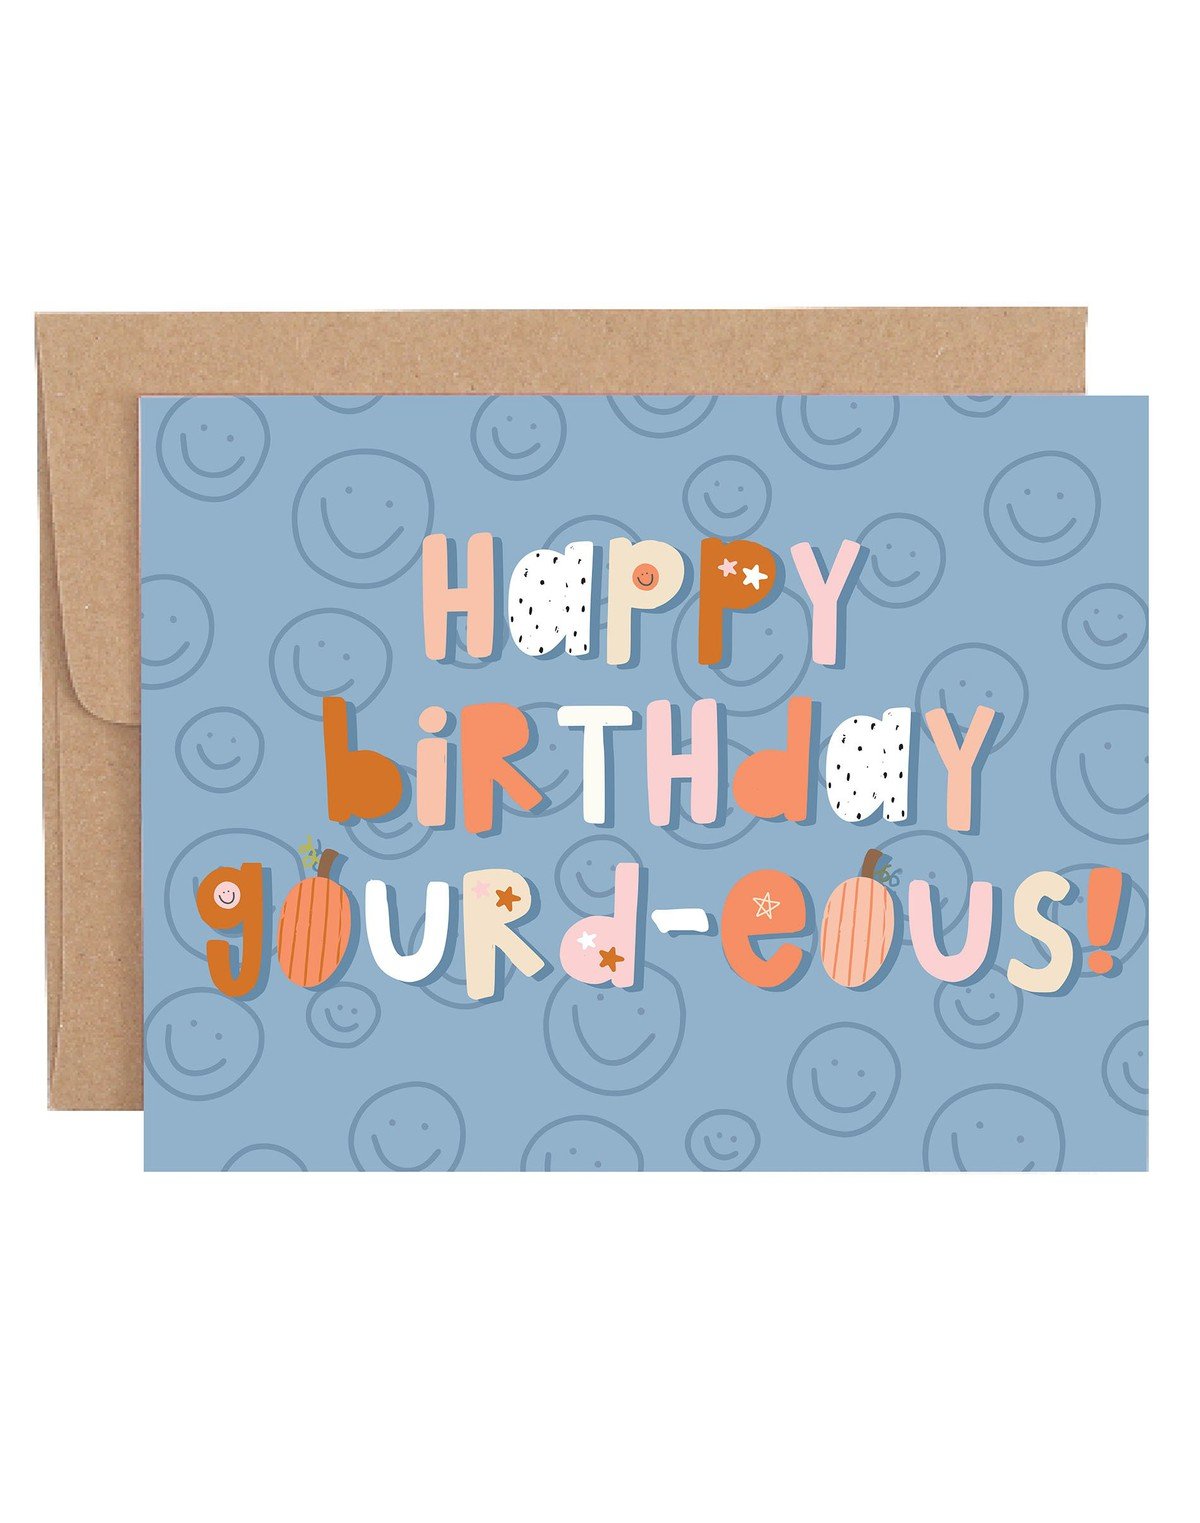 Happy Birthday Gourd-eous Greeting Card item